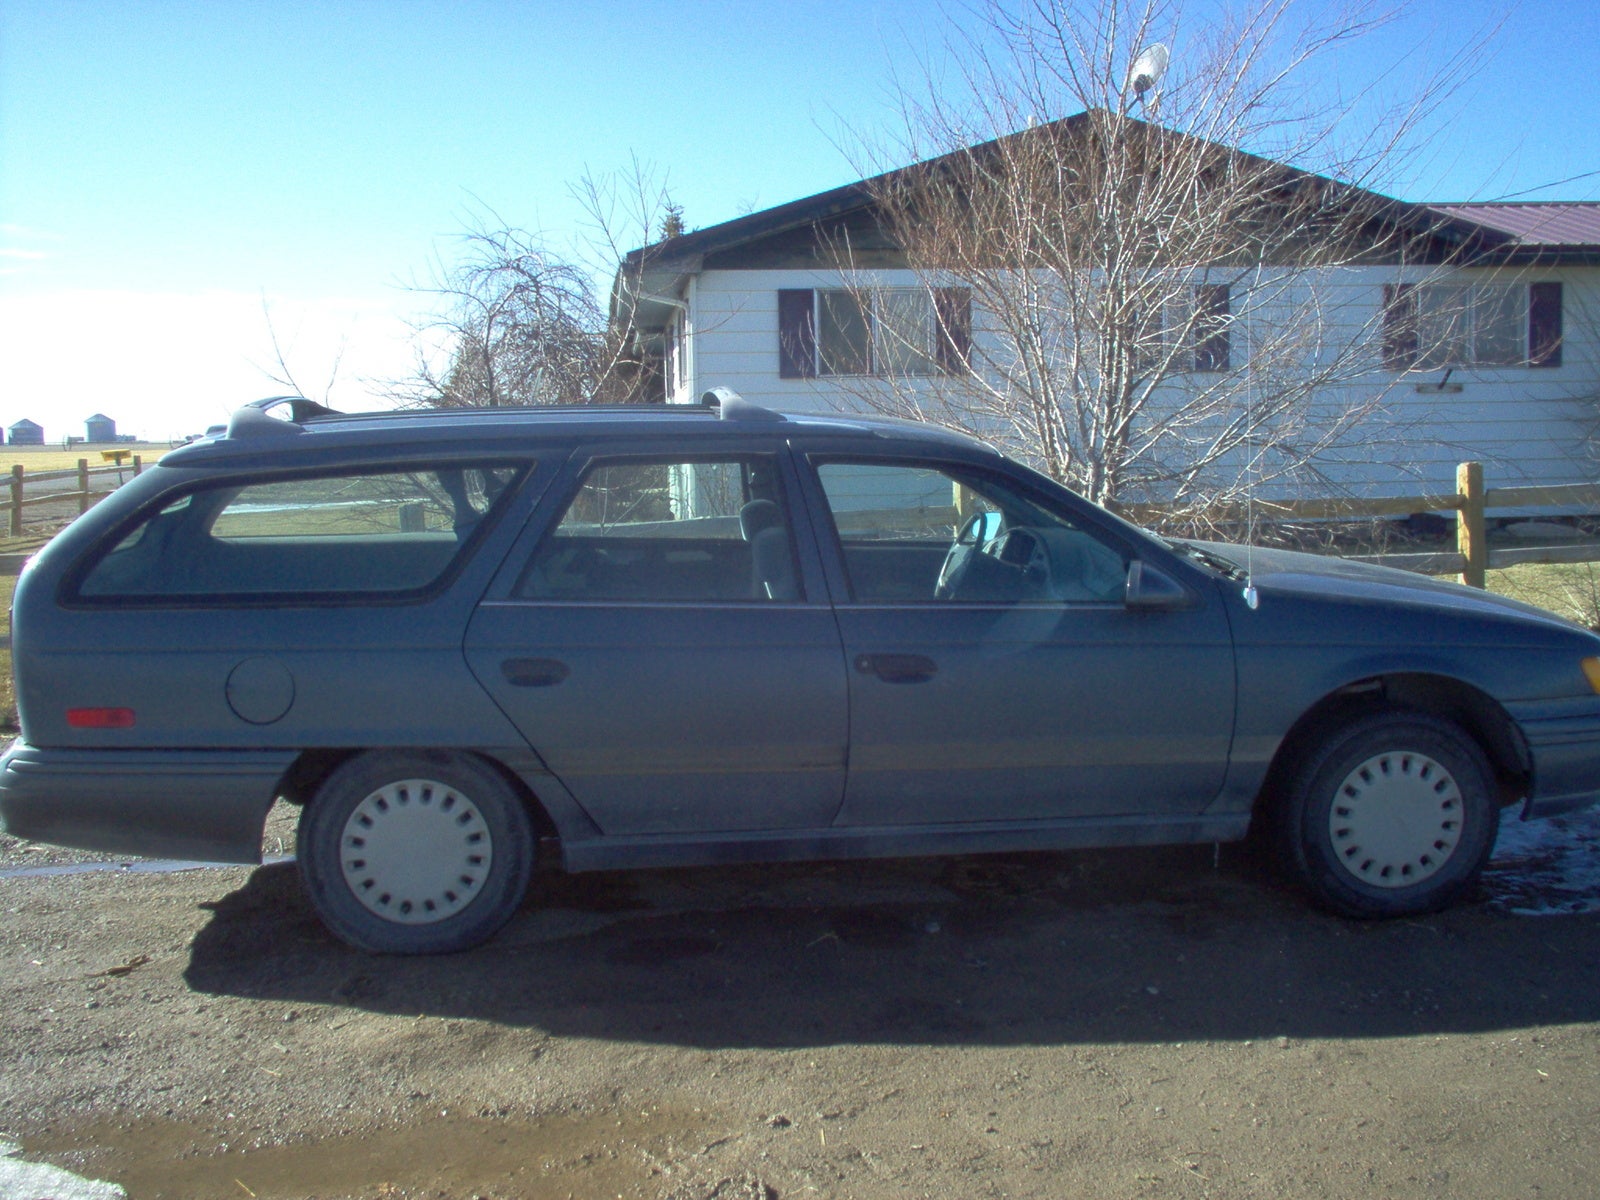 1992 Ford taurus lx station wagon #2